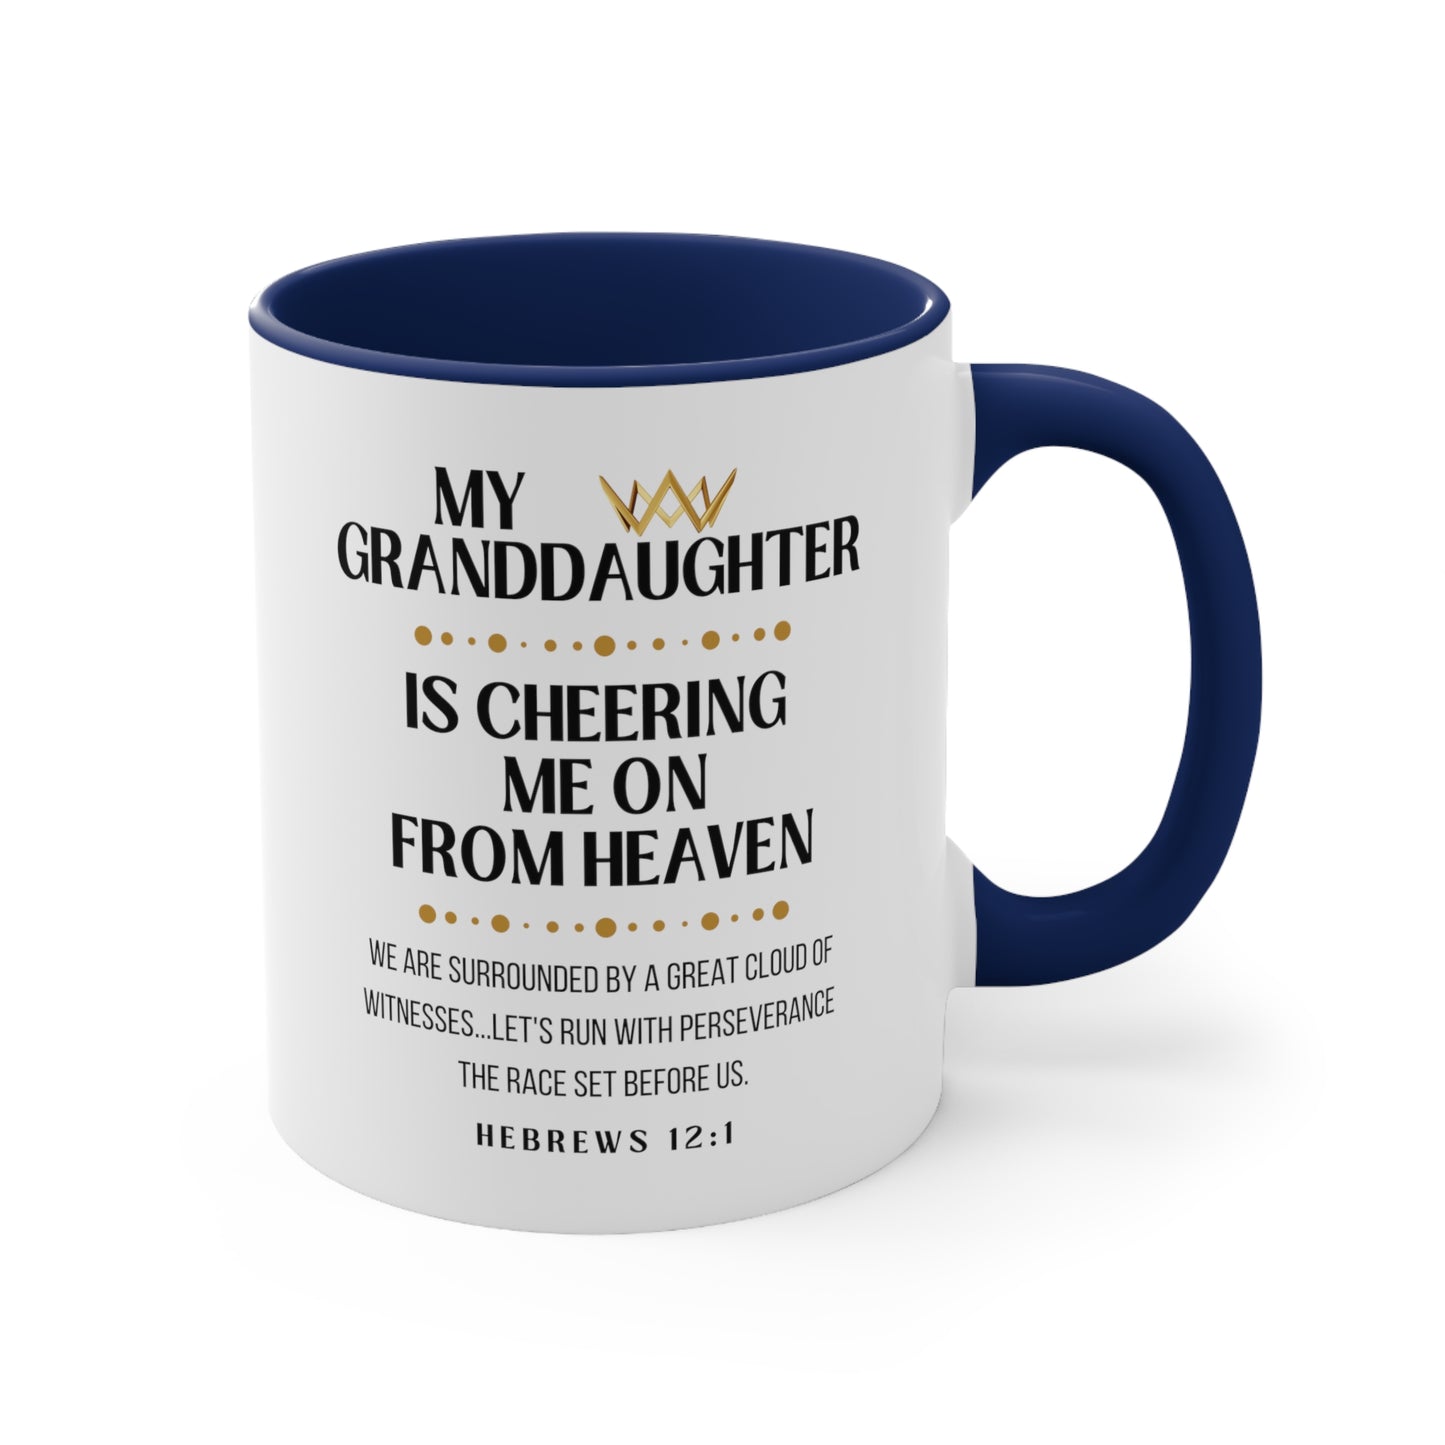 Granddaughter Memorial Gift Mug, Cheering Me On From Heaven